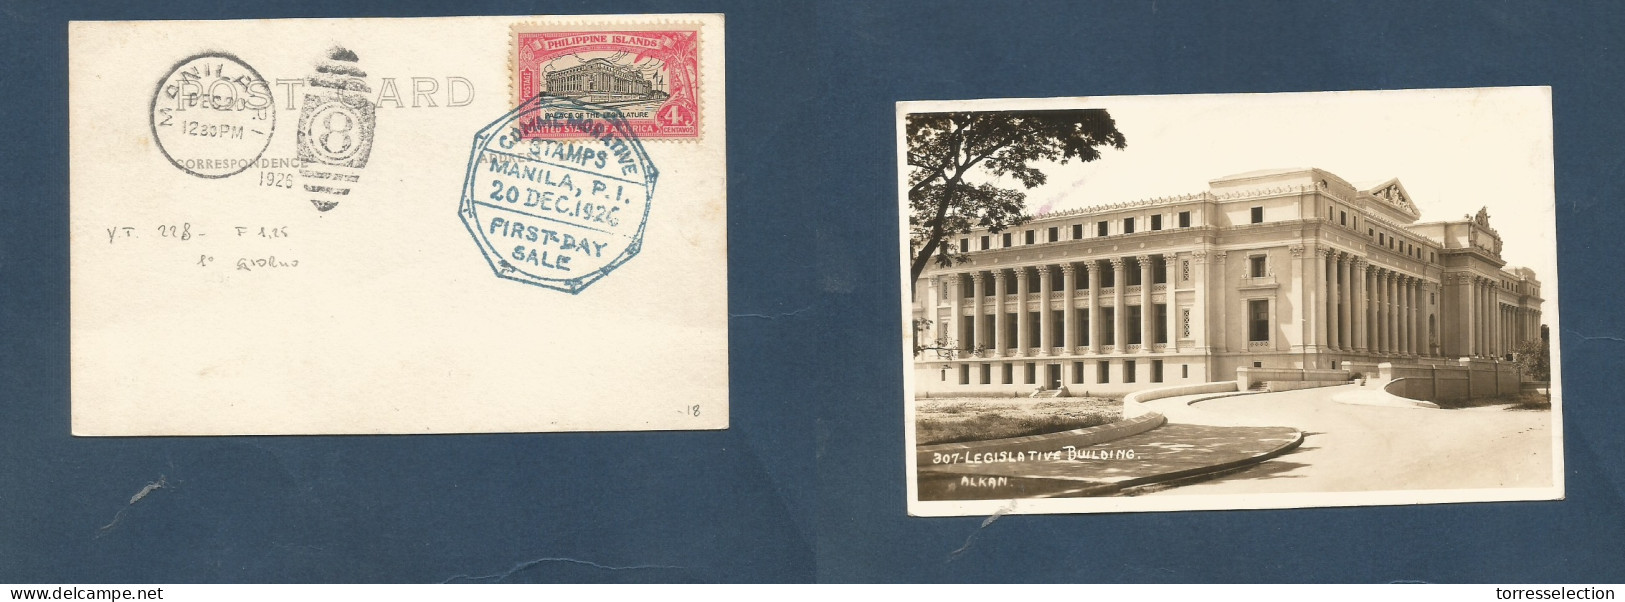 PHILIPPINES. 1926 (20 Dec) FDC. Comm Stamp Prefkd Alkan Photo Building. XSALE. - Philippinen